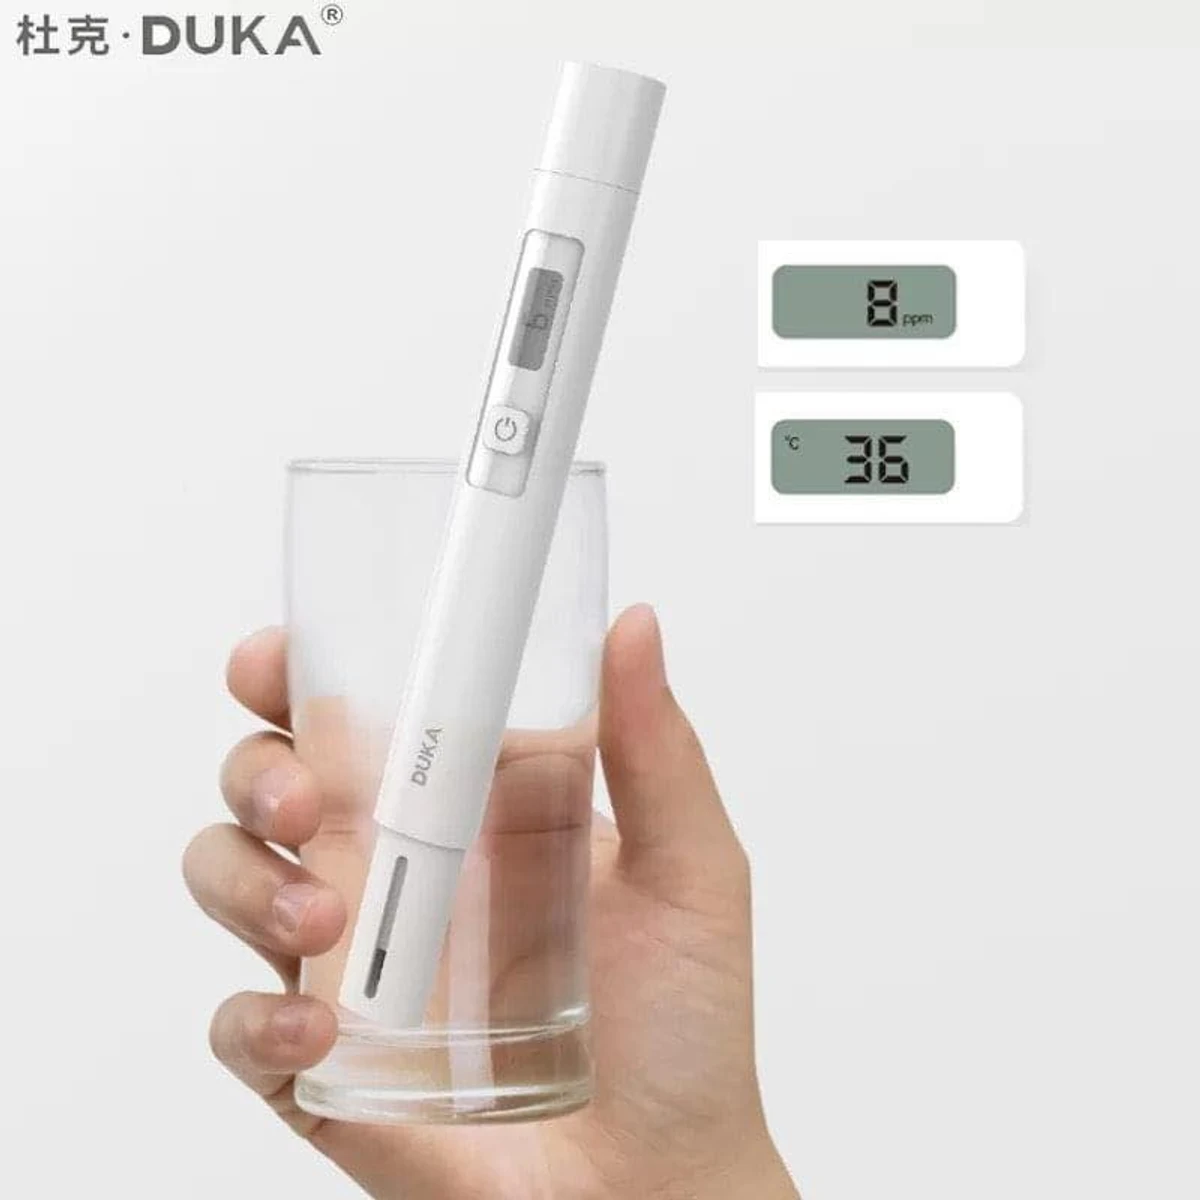 Xiaomi Atuman duka water purification tester meter